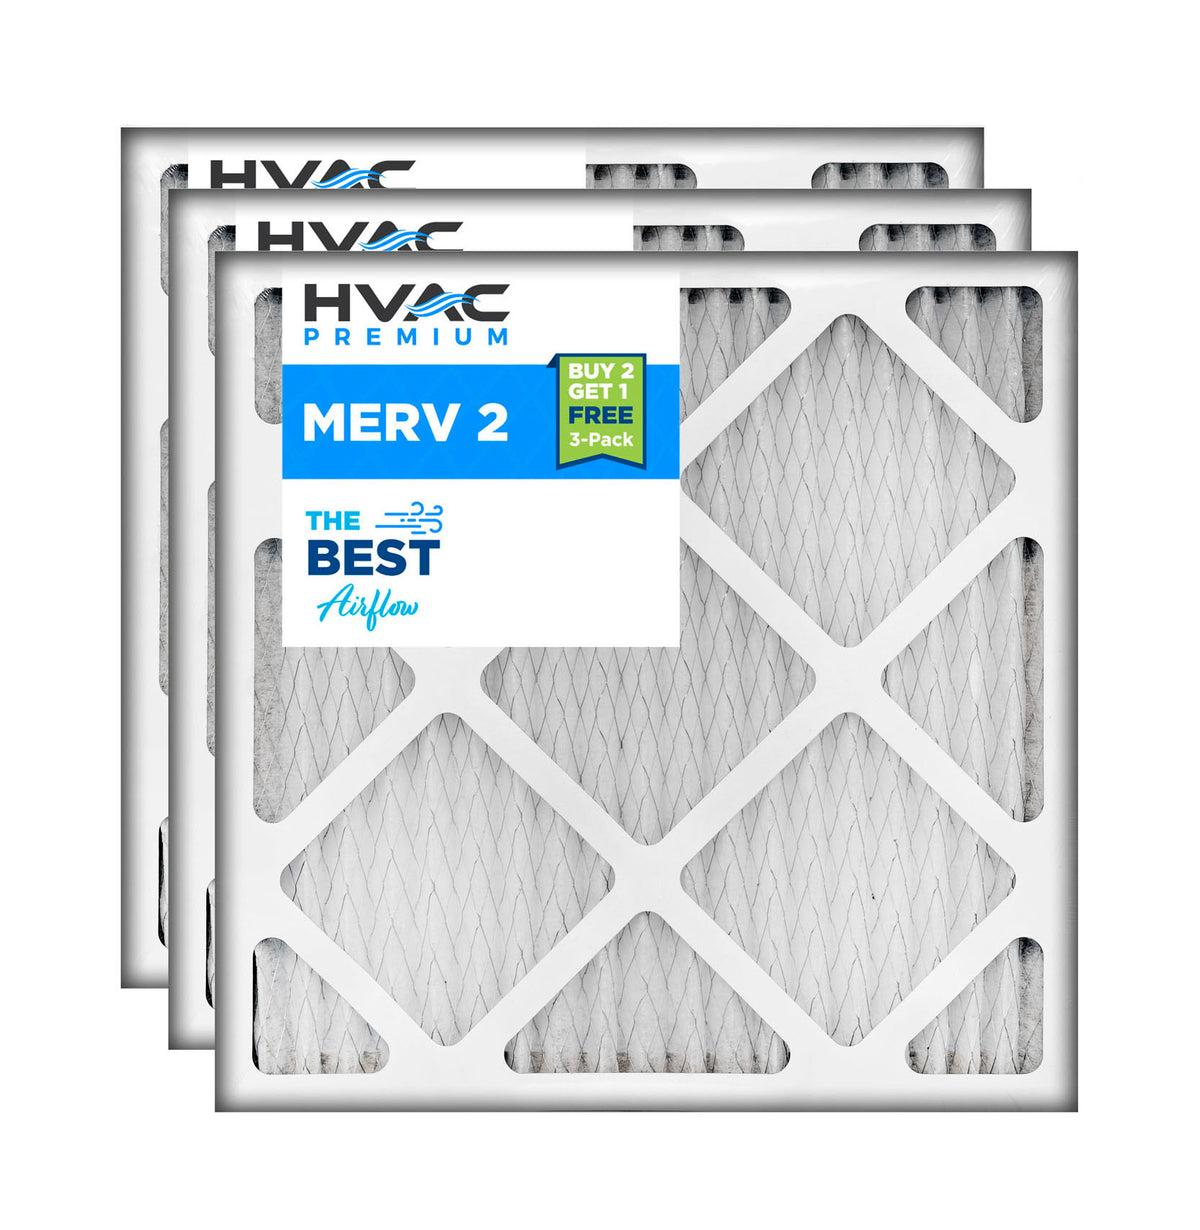 12 x 12 Merv 2 HVAC Pleated Filter, 3-Pack